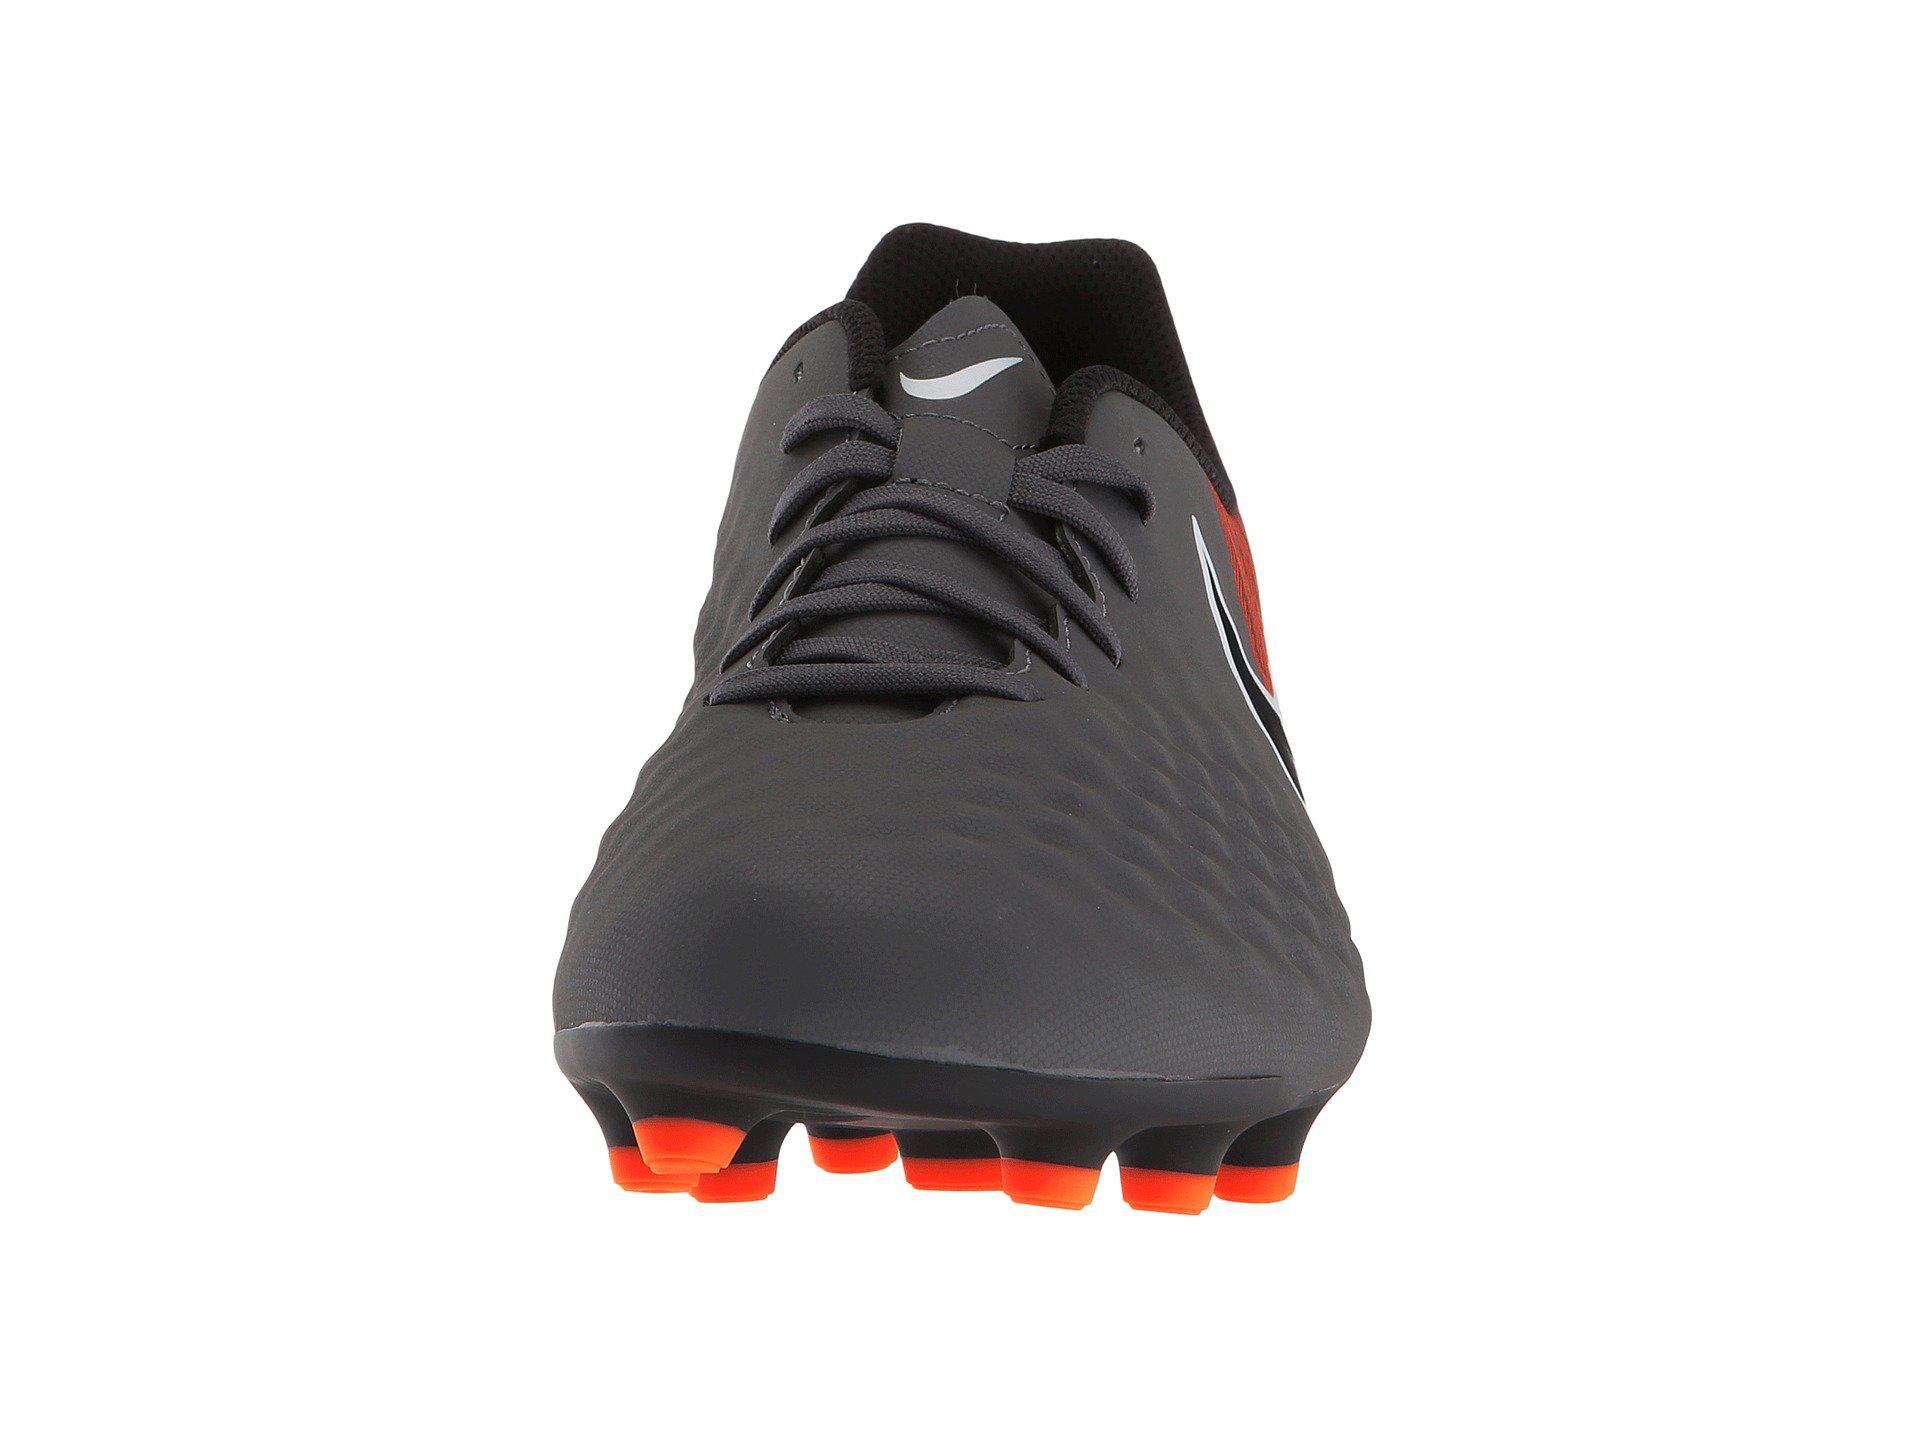 Shop Green Nike MagistaX Proximo II Turf Football Shoe for